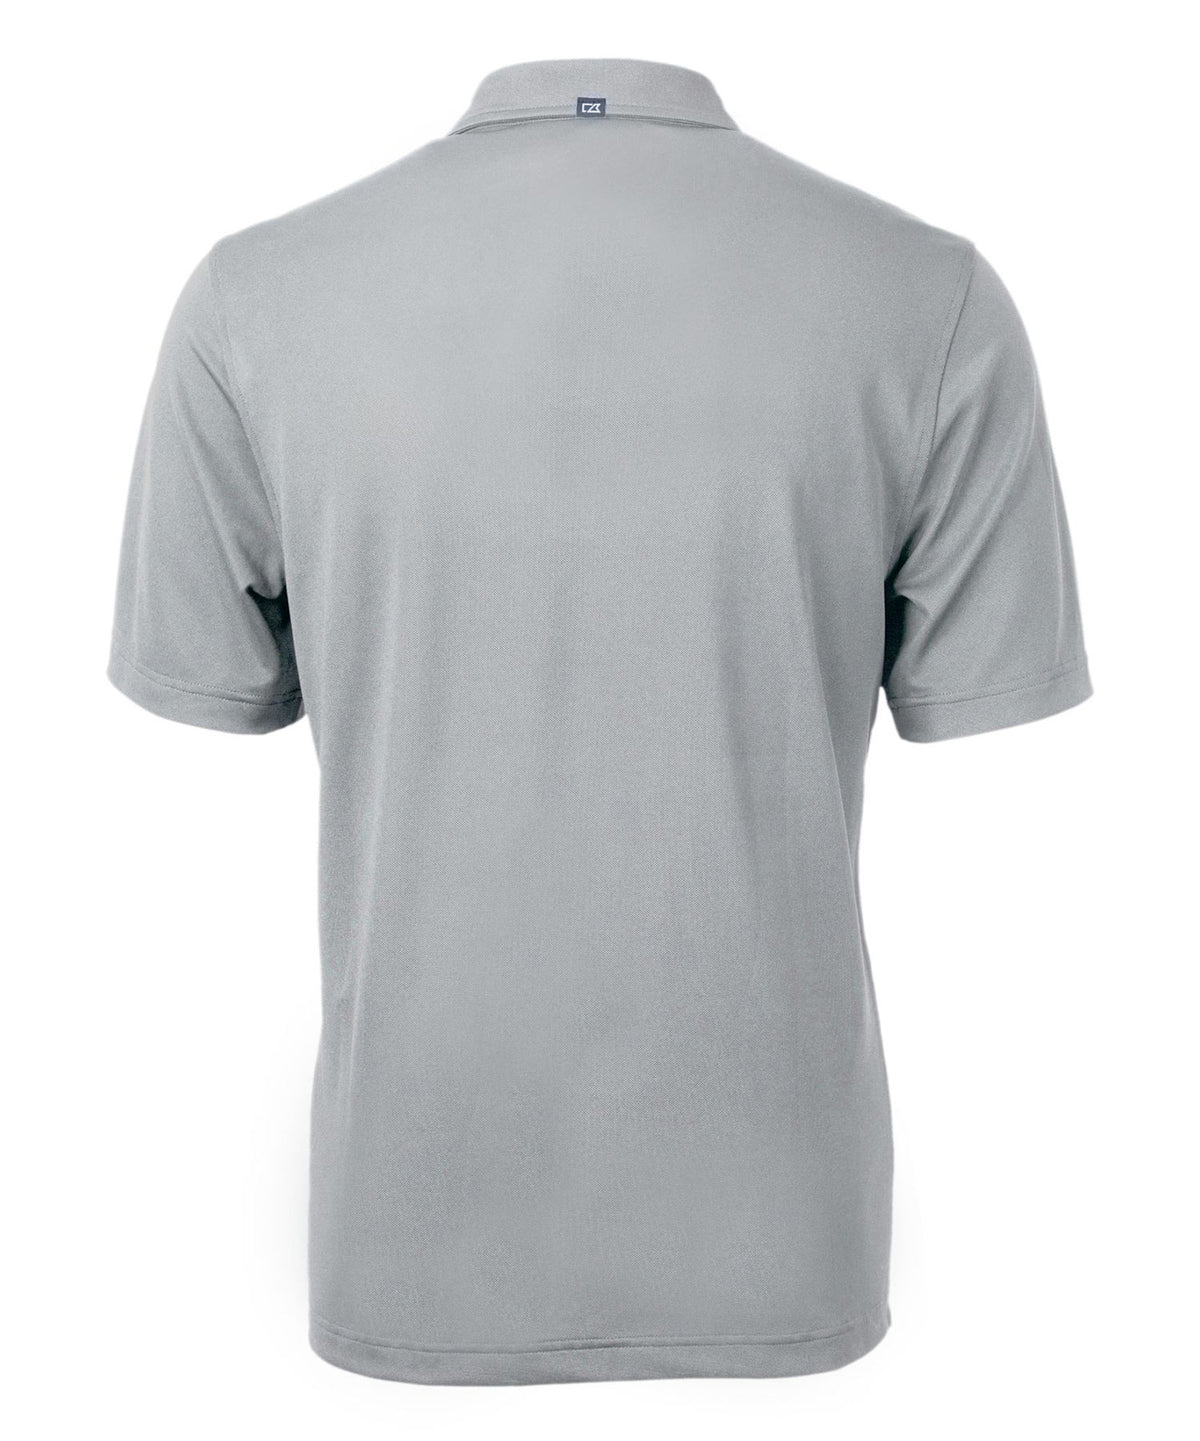 Cutter & Buck Auburn University Tigers Short Sleeve Polo Knit Shirt, Men's Big & Tall